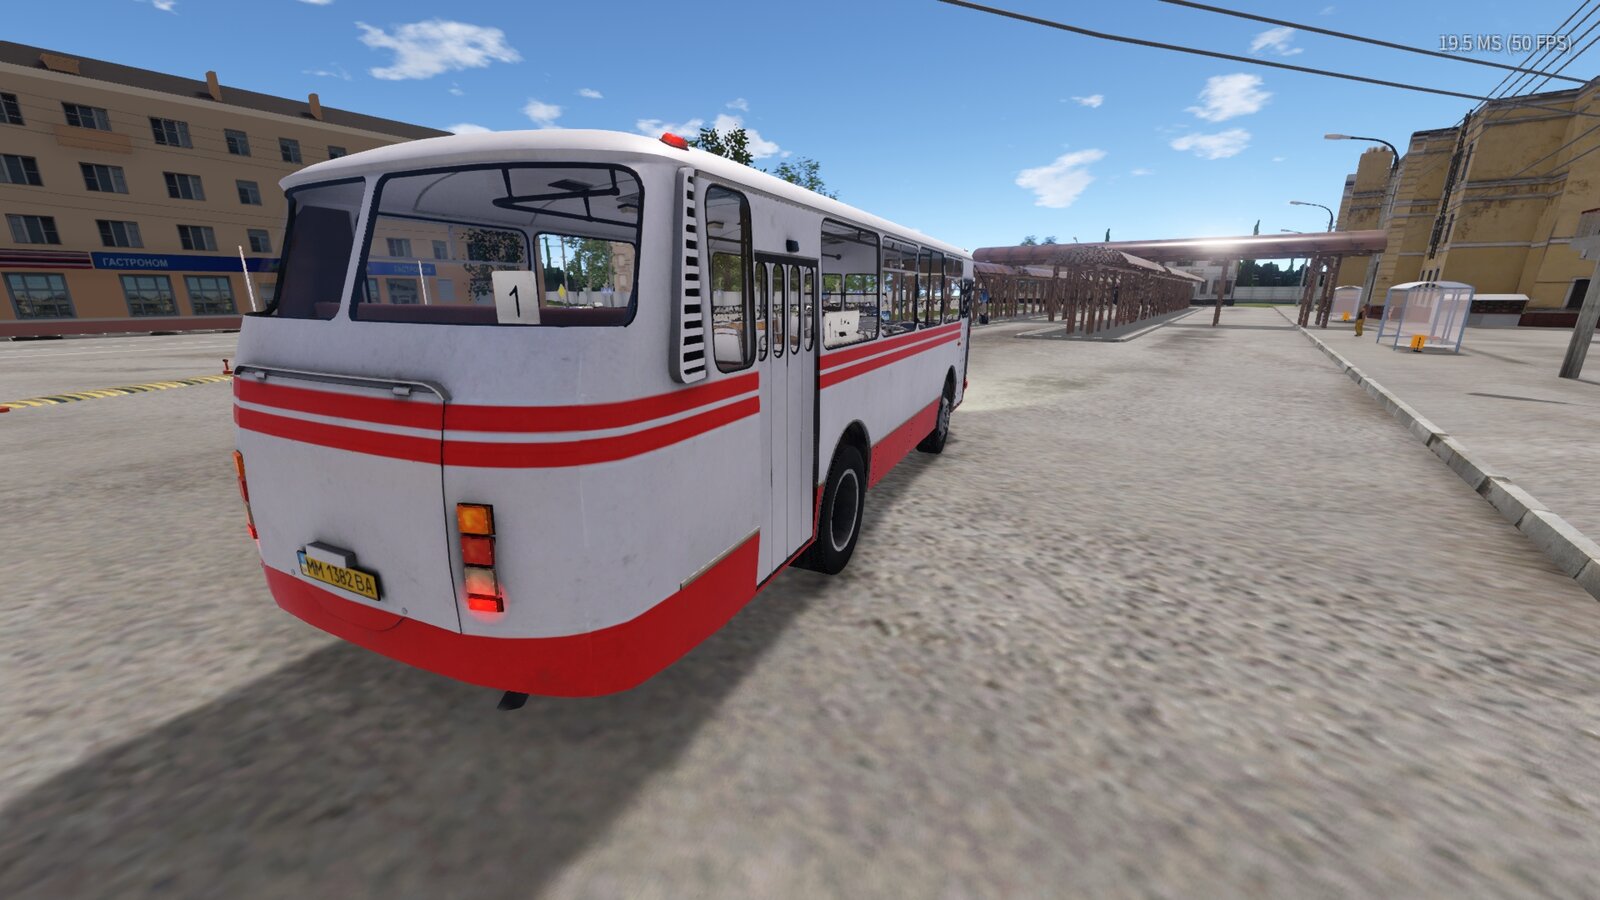 Bus Driver Simulator - Soviet Legend